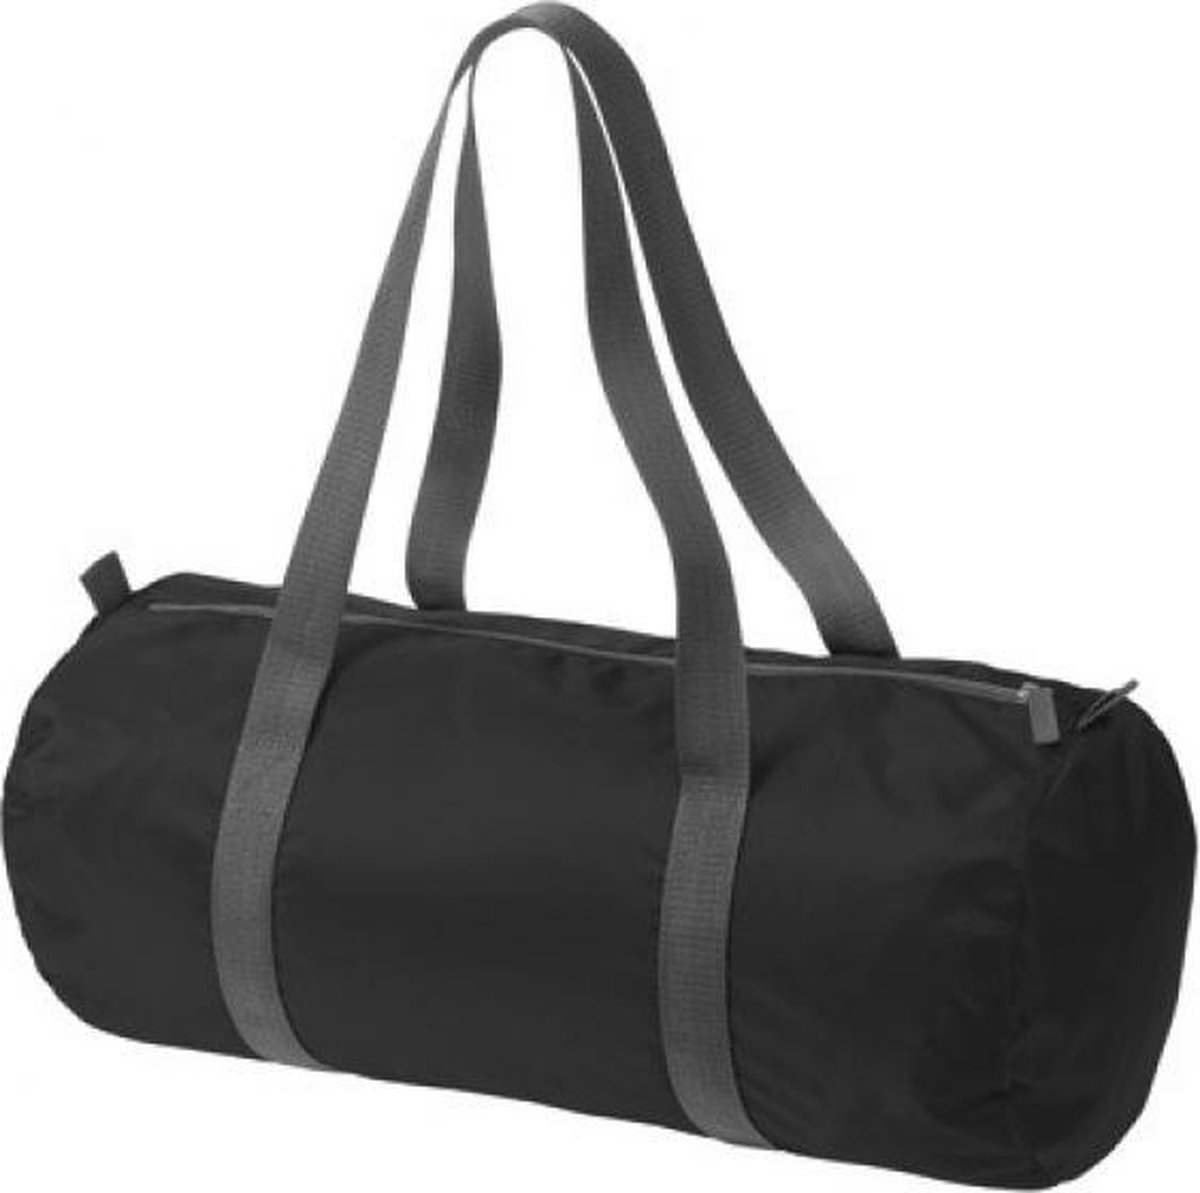 Sport Bag Canny (Zwart)